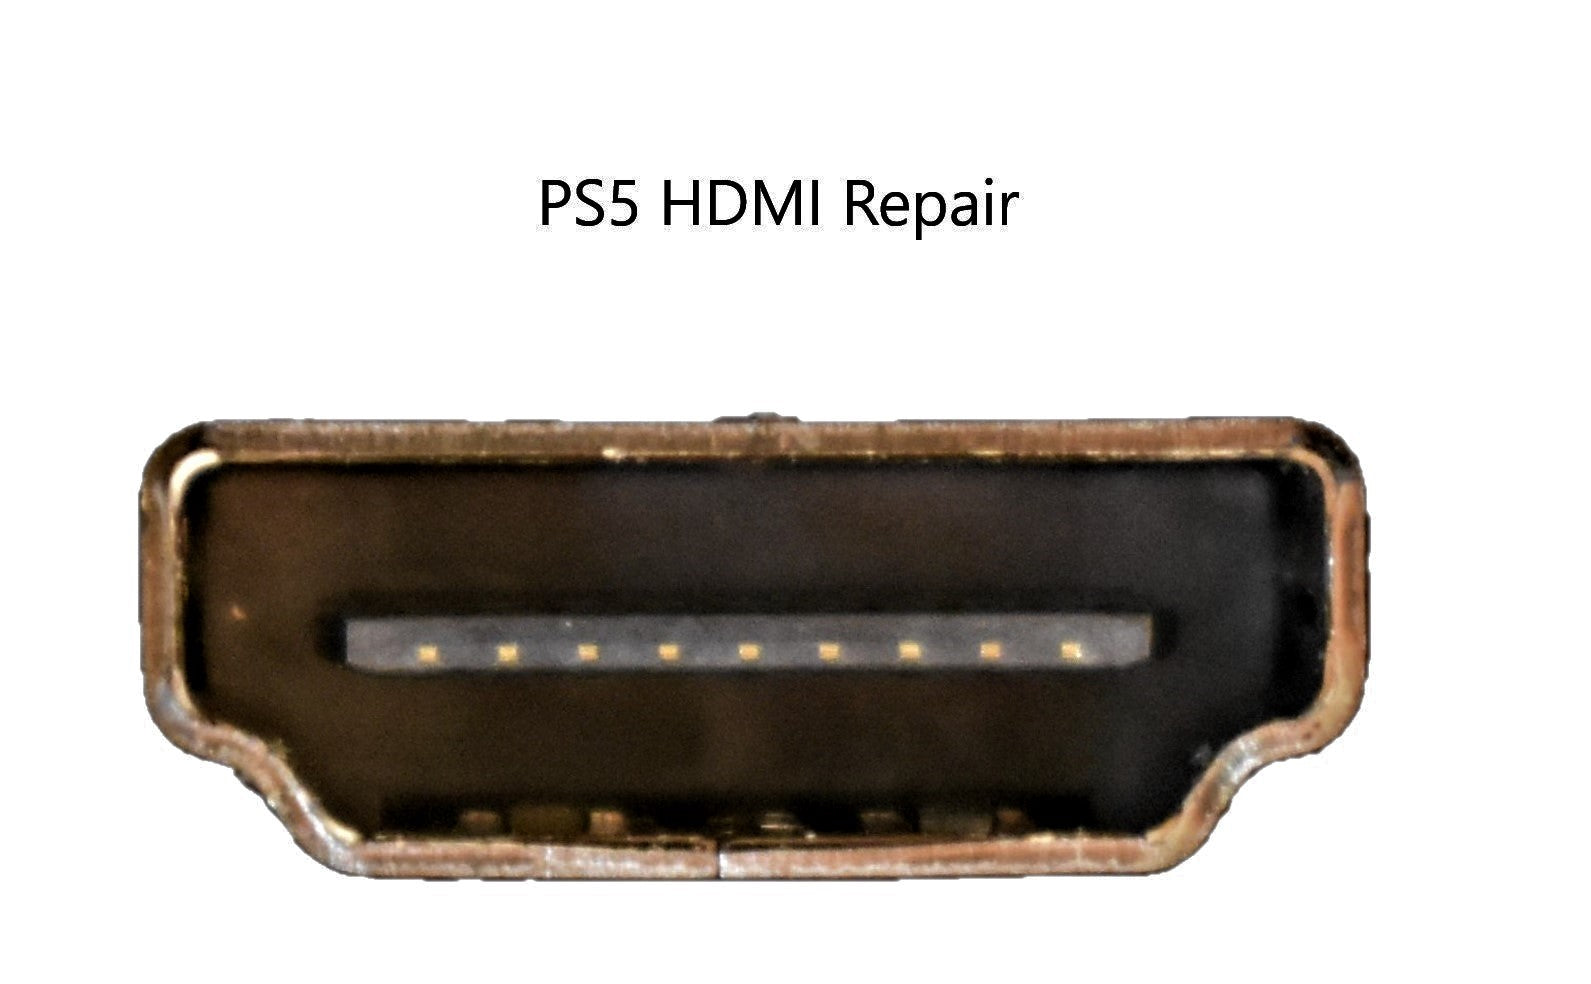 How to Fix a PS5 HDMI Port